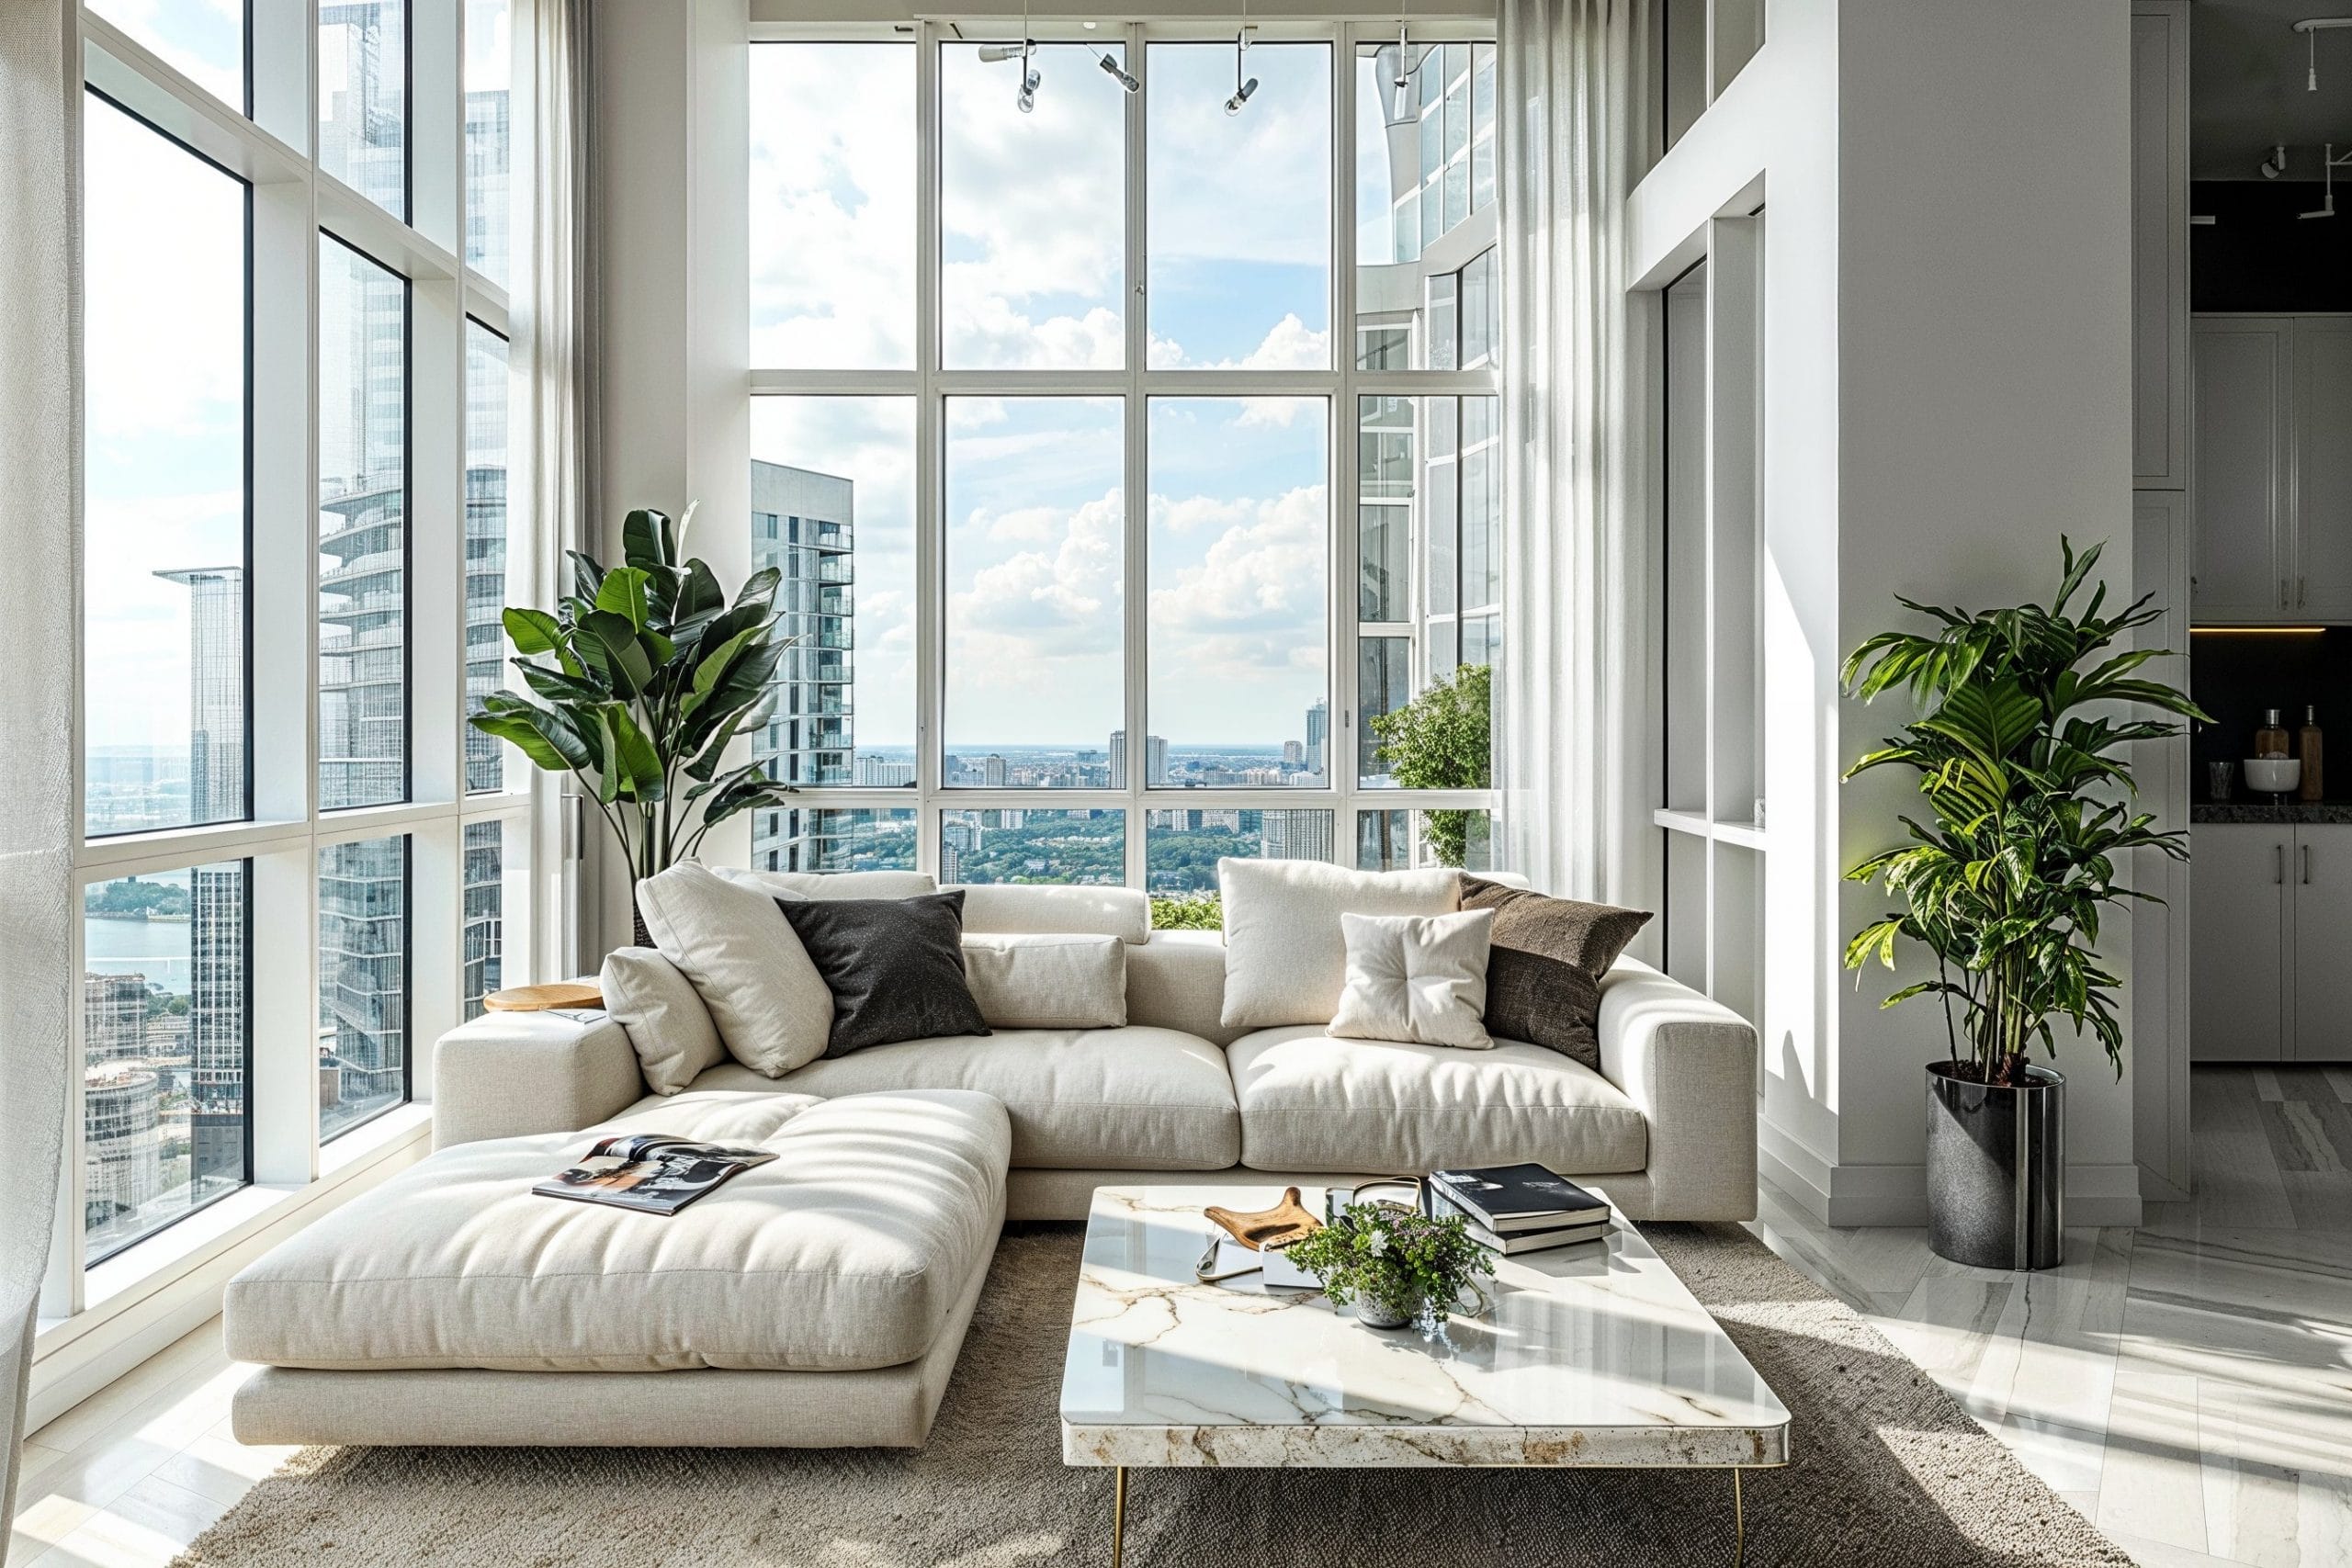 Luxury NYC apartment interior by Decorilla